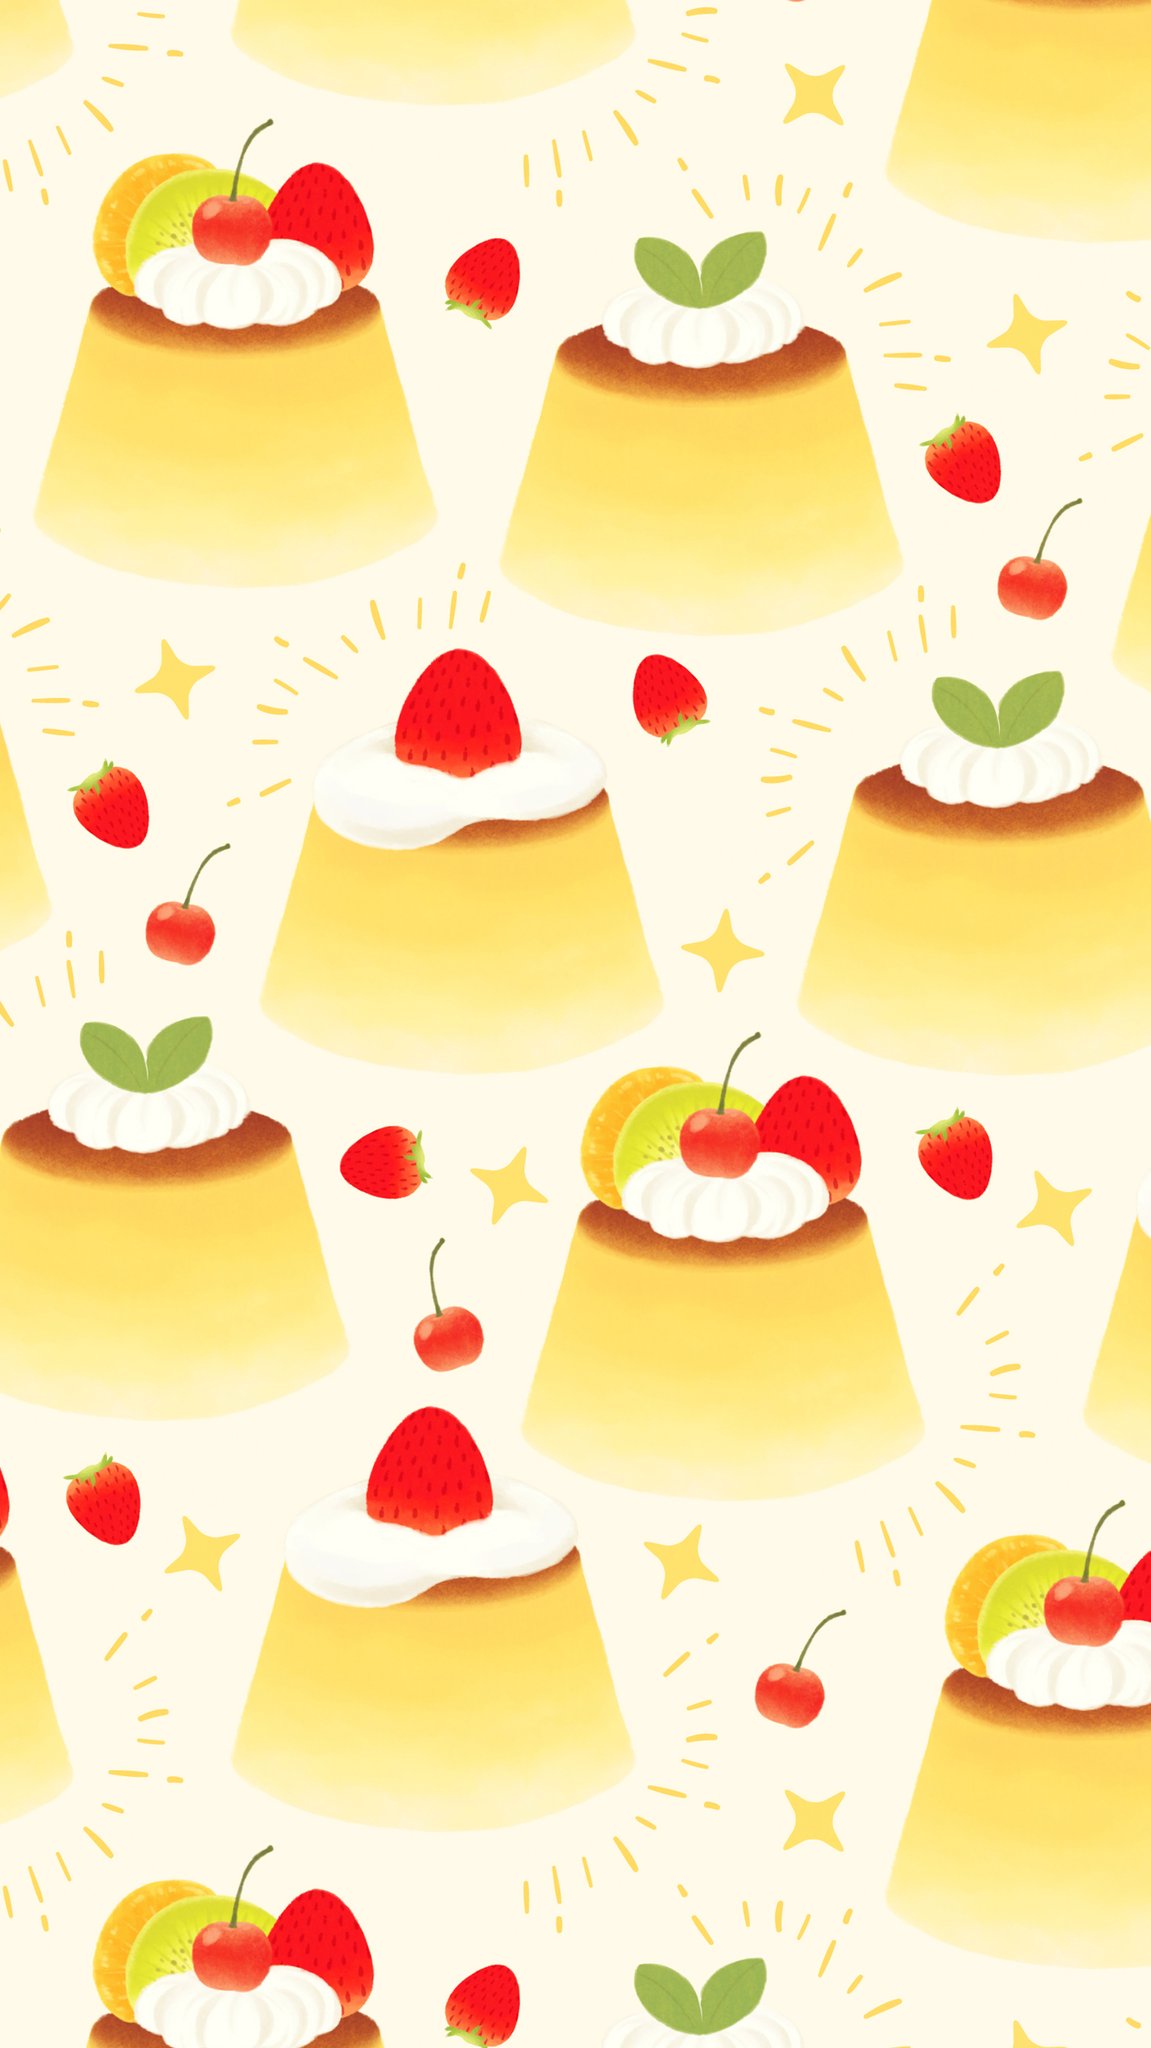 Omiyu みゆき בטוויטר カスタードプリンな壁紙 Illust Illustration 壁紙 イラスト Iphone 壁紙 プリン いちご 食べ物 Strawberry